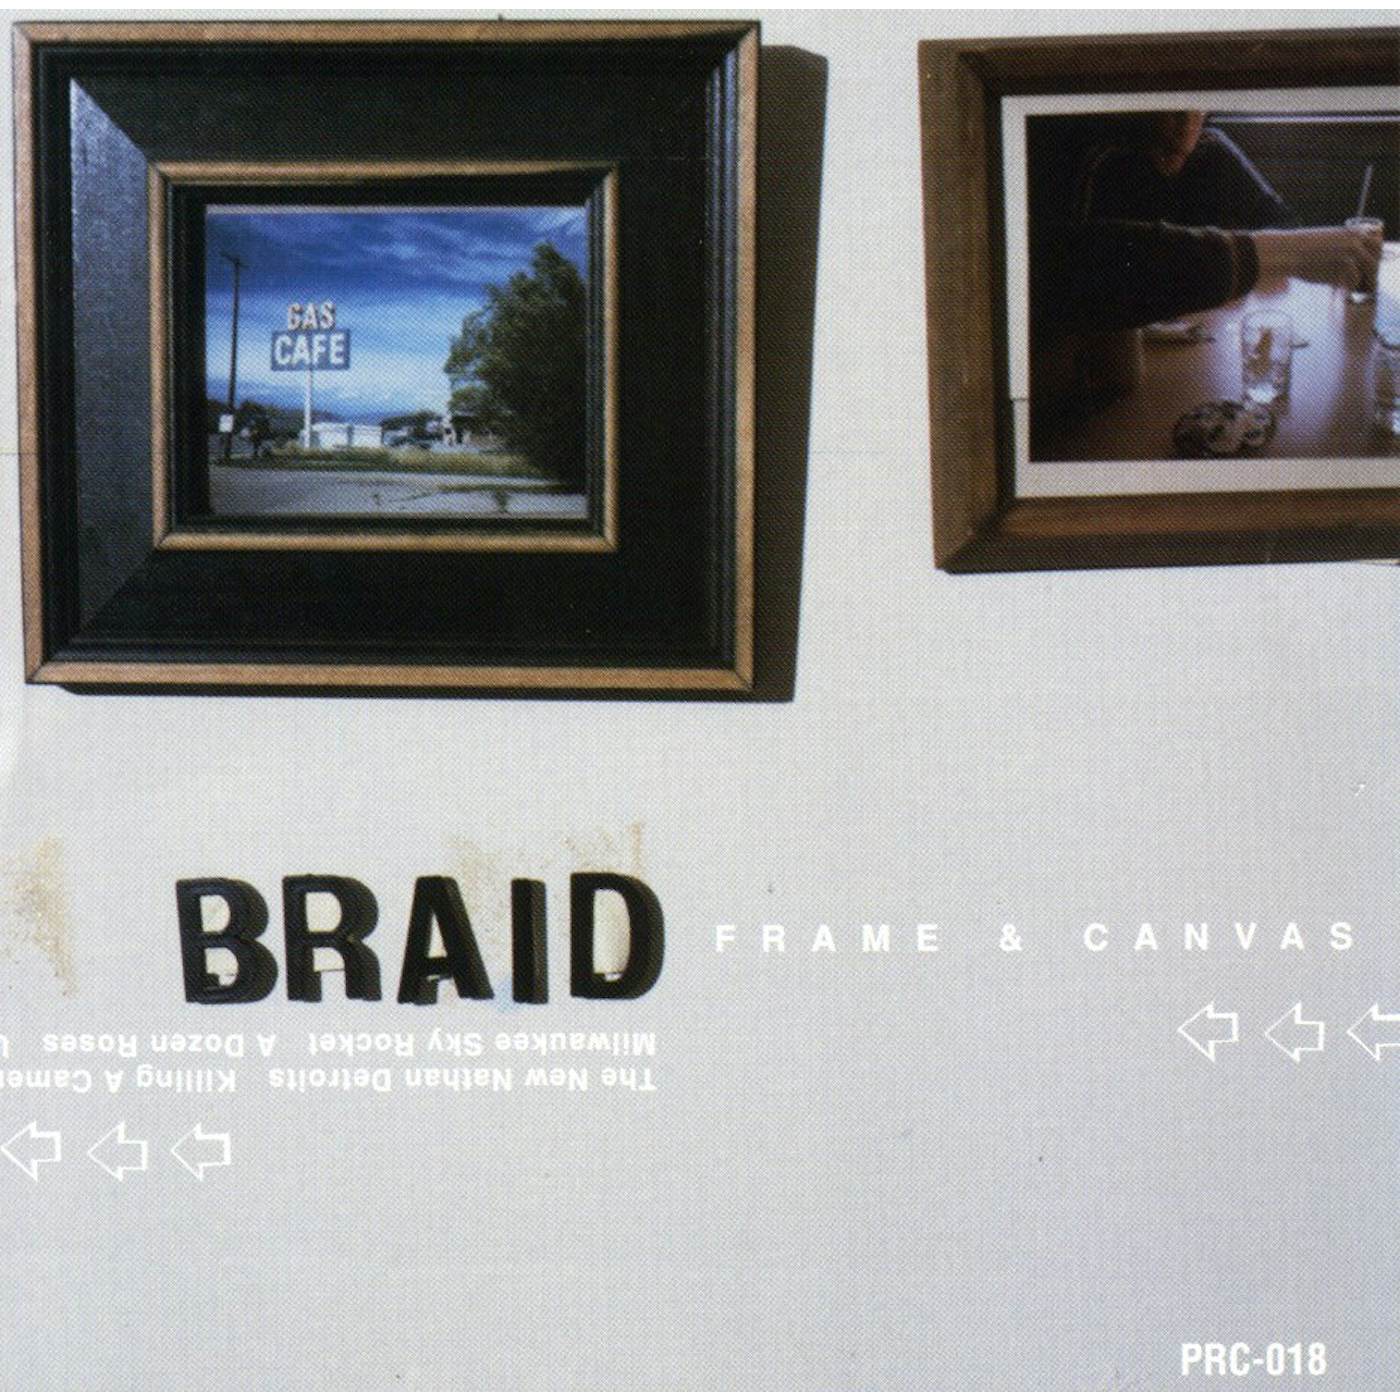 Braid FRAME & CANVAS CD